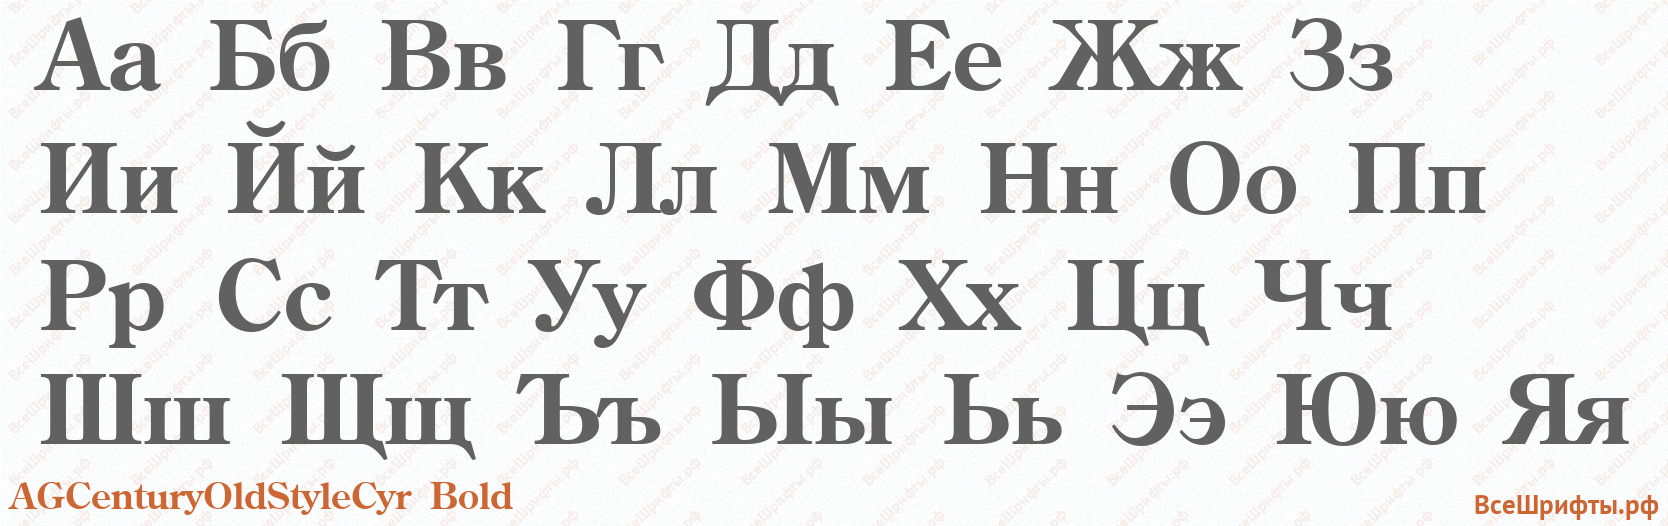 Шрифт AGCenturyOldStyleCyr Bold с русскими буквами